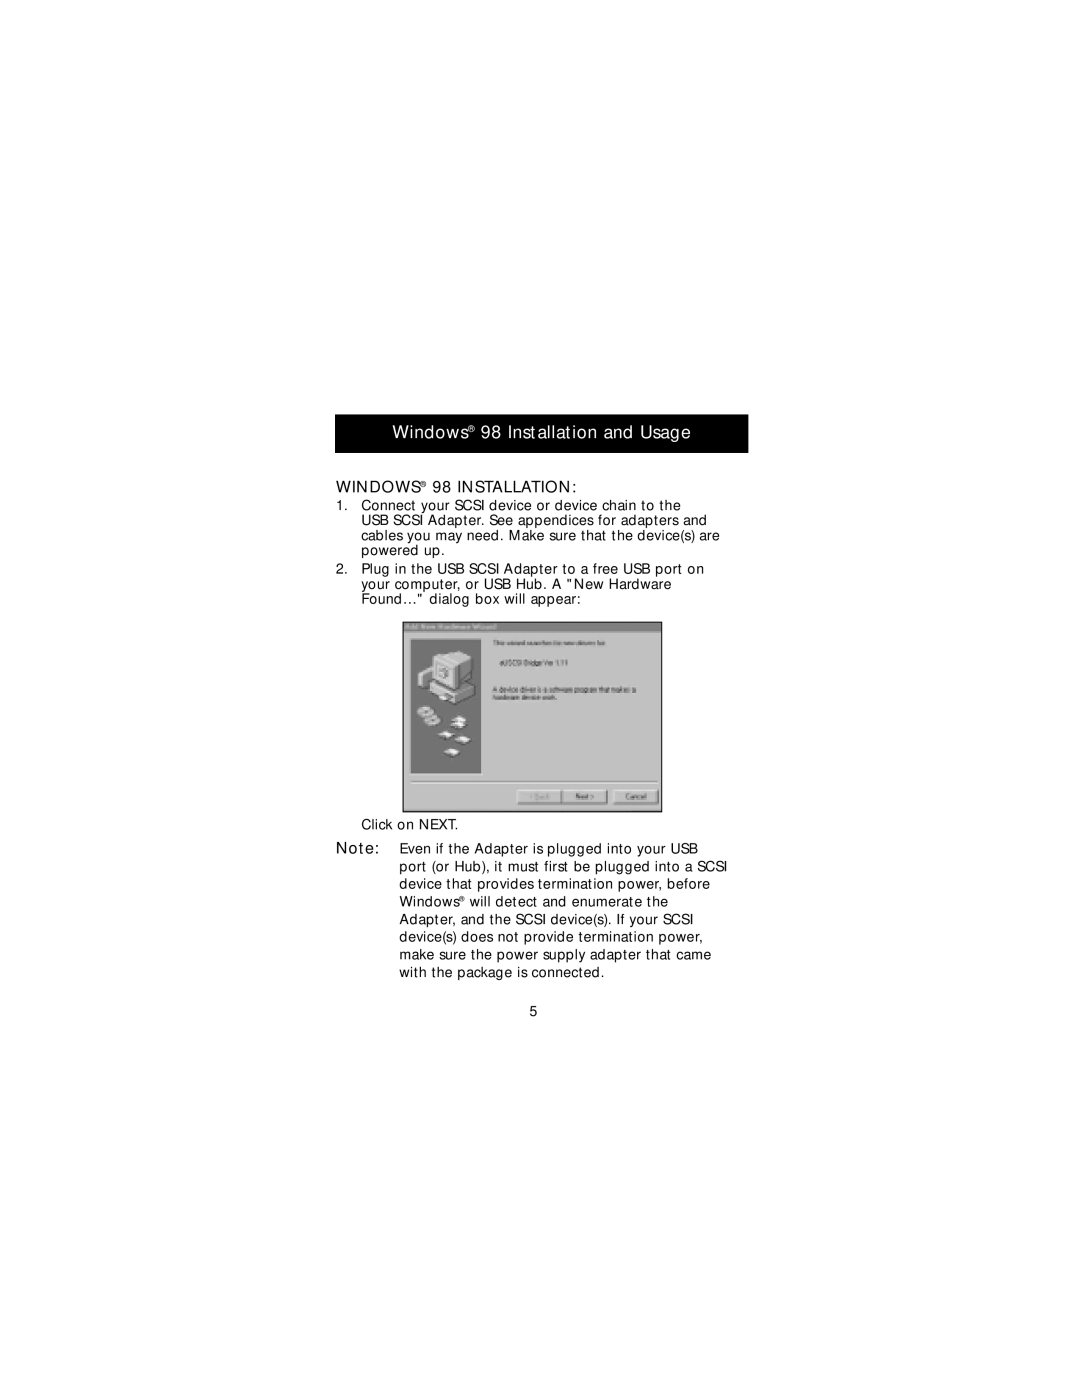 Belkin F5U015-TPW manual Windows 98 Installation and Usage, WINDOWS 98 INSTALLATION 